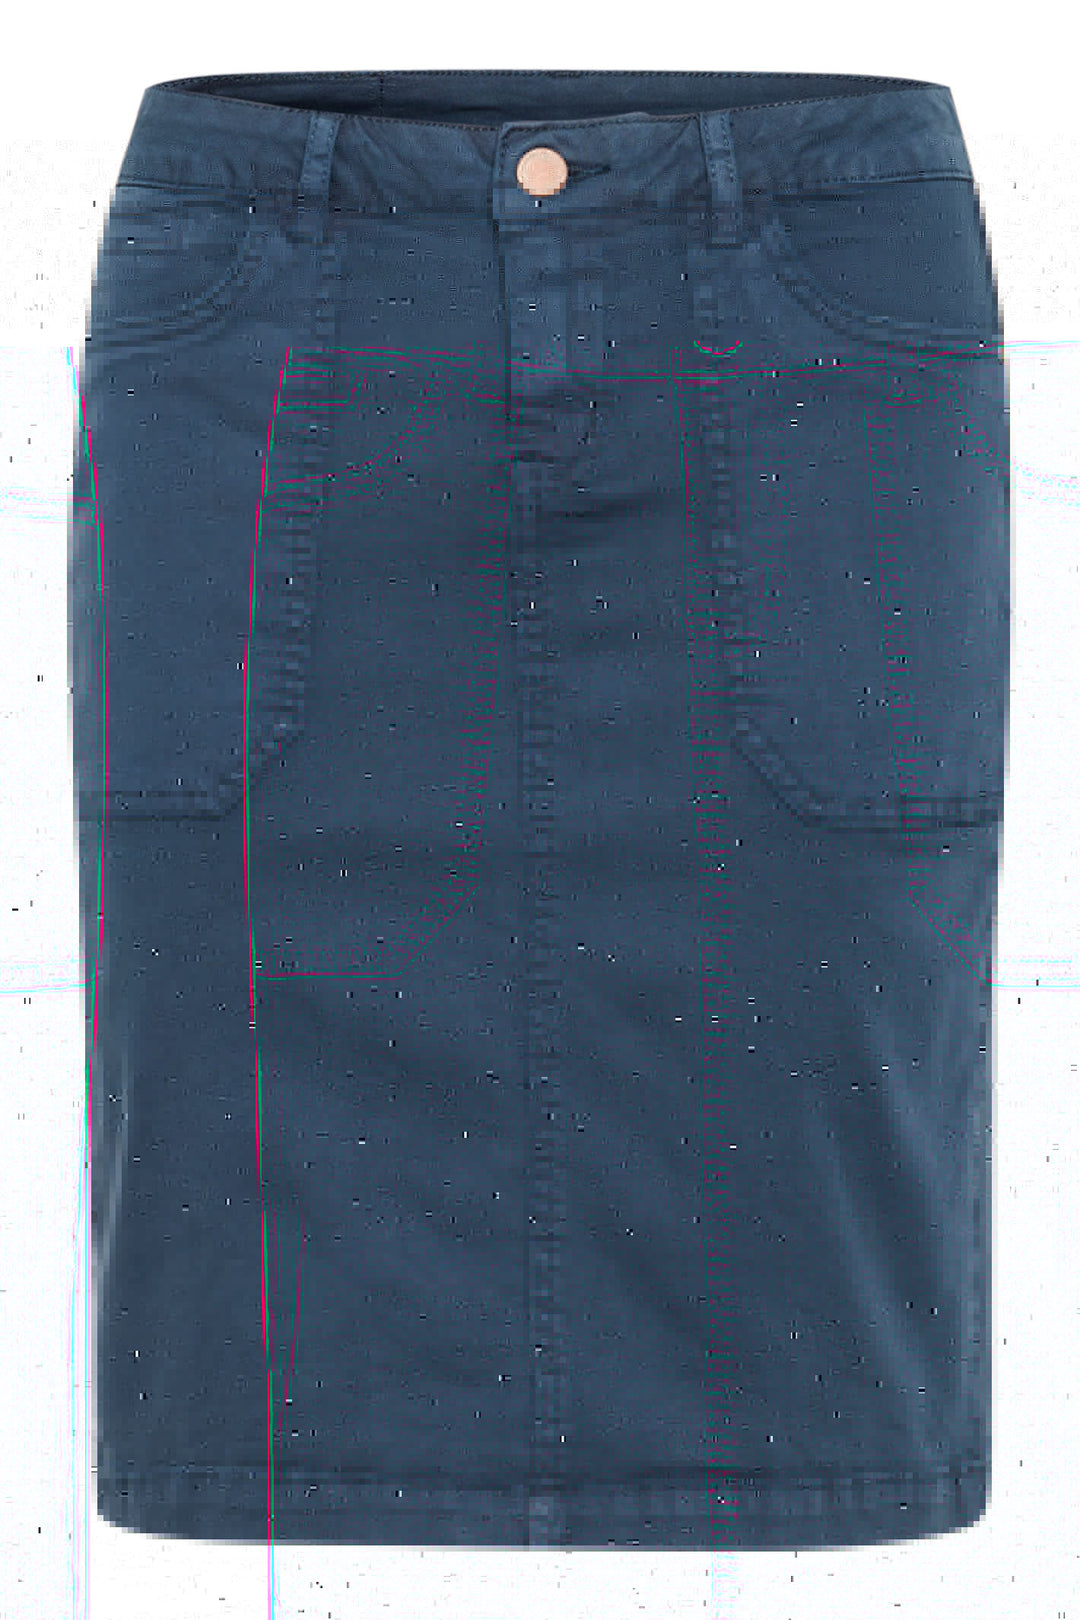 Cream 10612273 CRAnn Dress Blues Twill Jean Style Skirt - Dotique Chesterfield